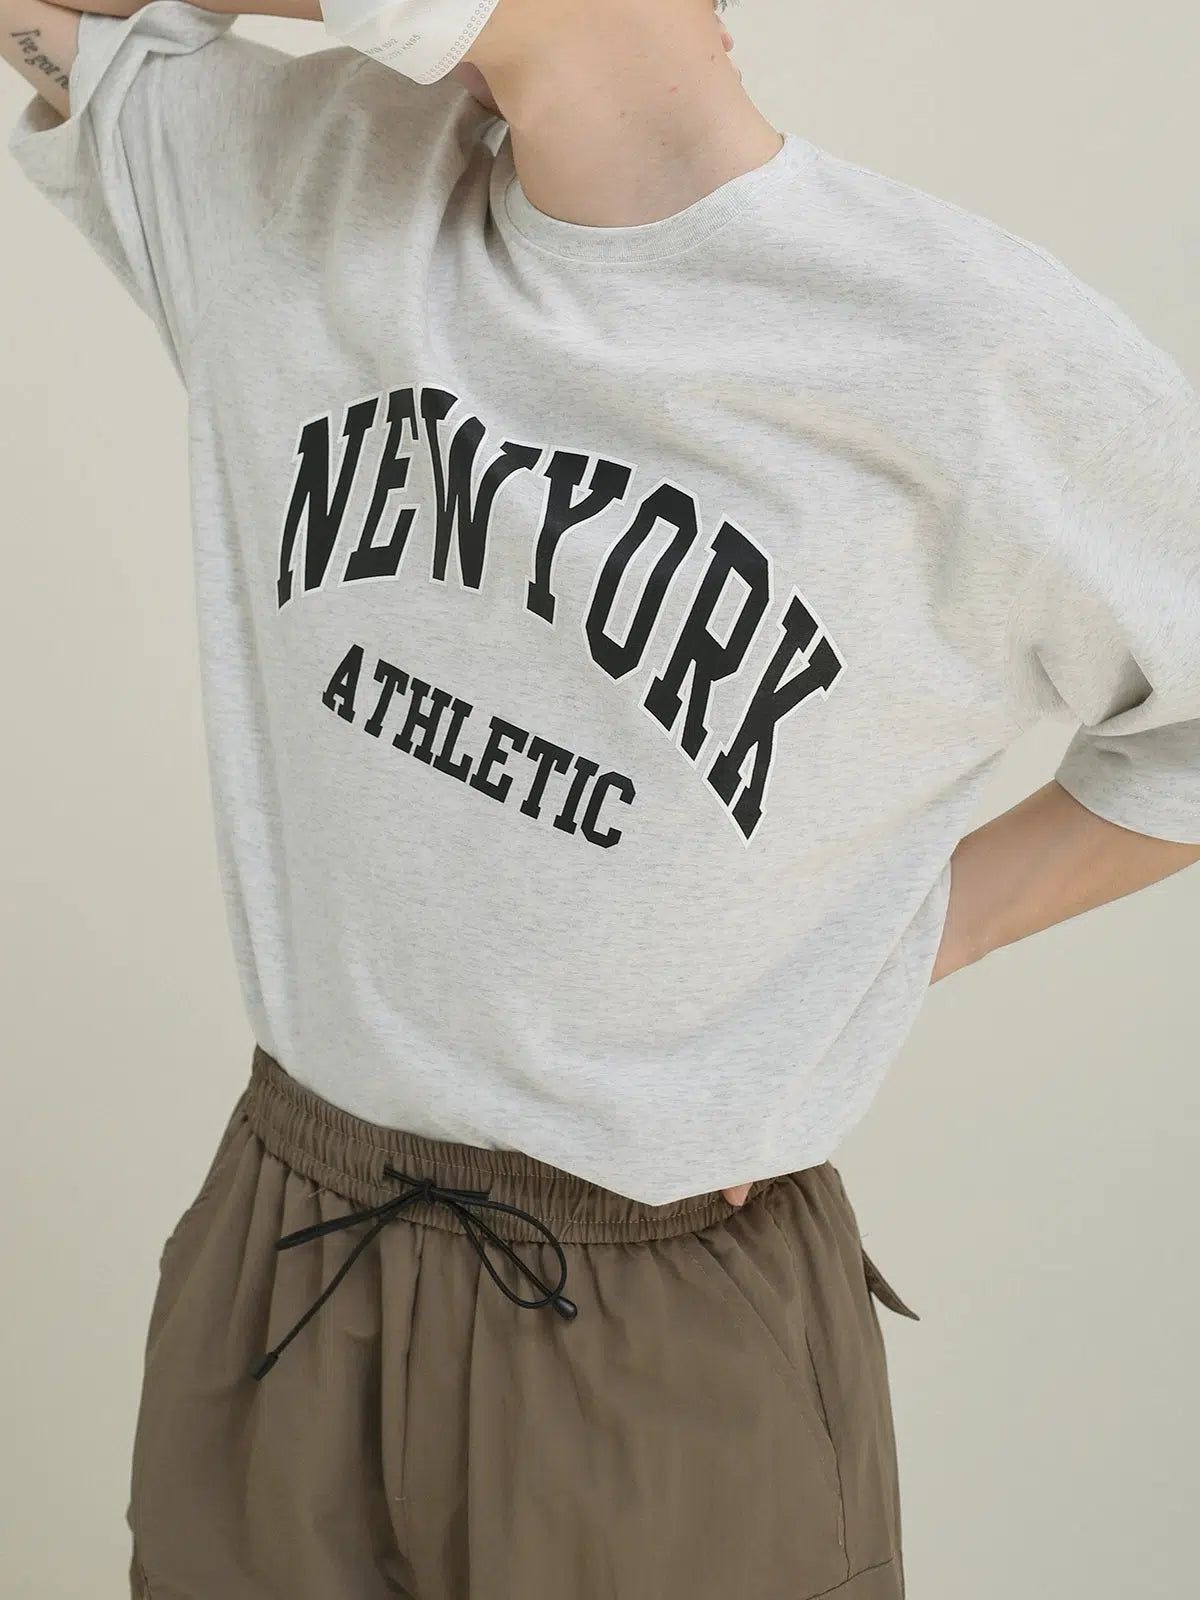 Zhou New York Athletic Text T-Shirt-korean-fashion-T-Shirt-Zhou's Closet-OH Garments